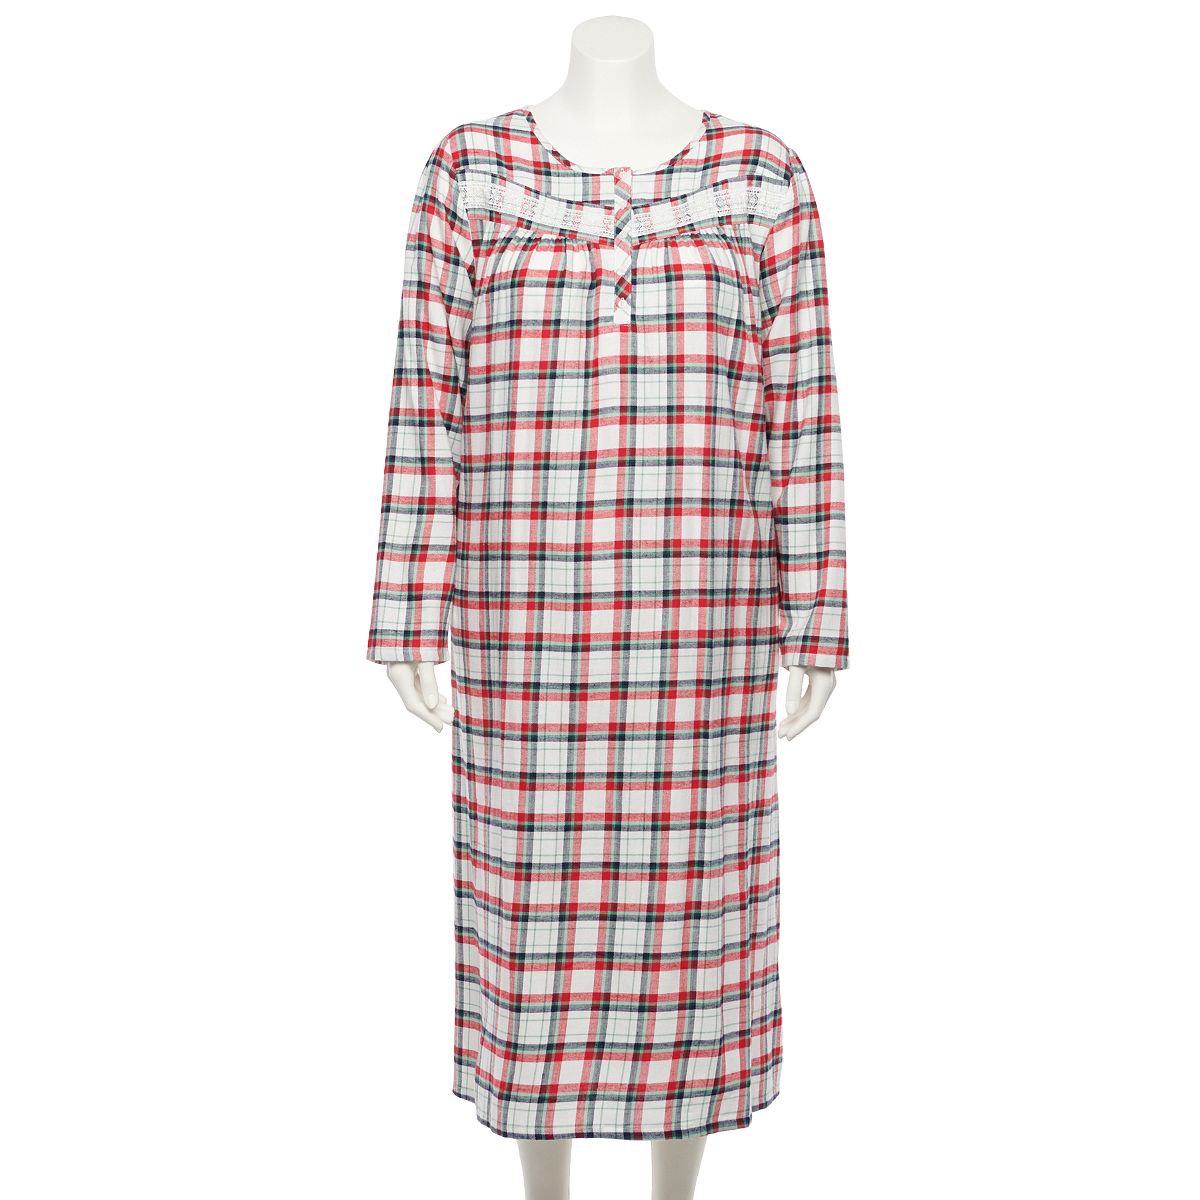 Womens Flannel Nightgown 100% Cotton Flannel Red Plaid Sleep  Dress/Nightshirt